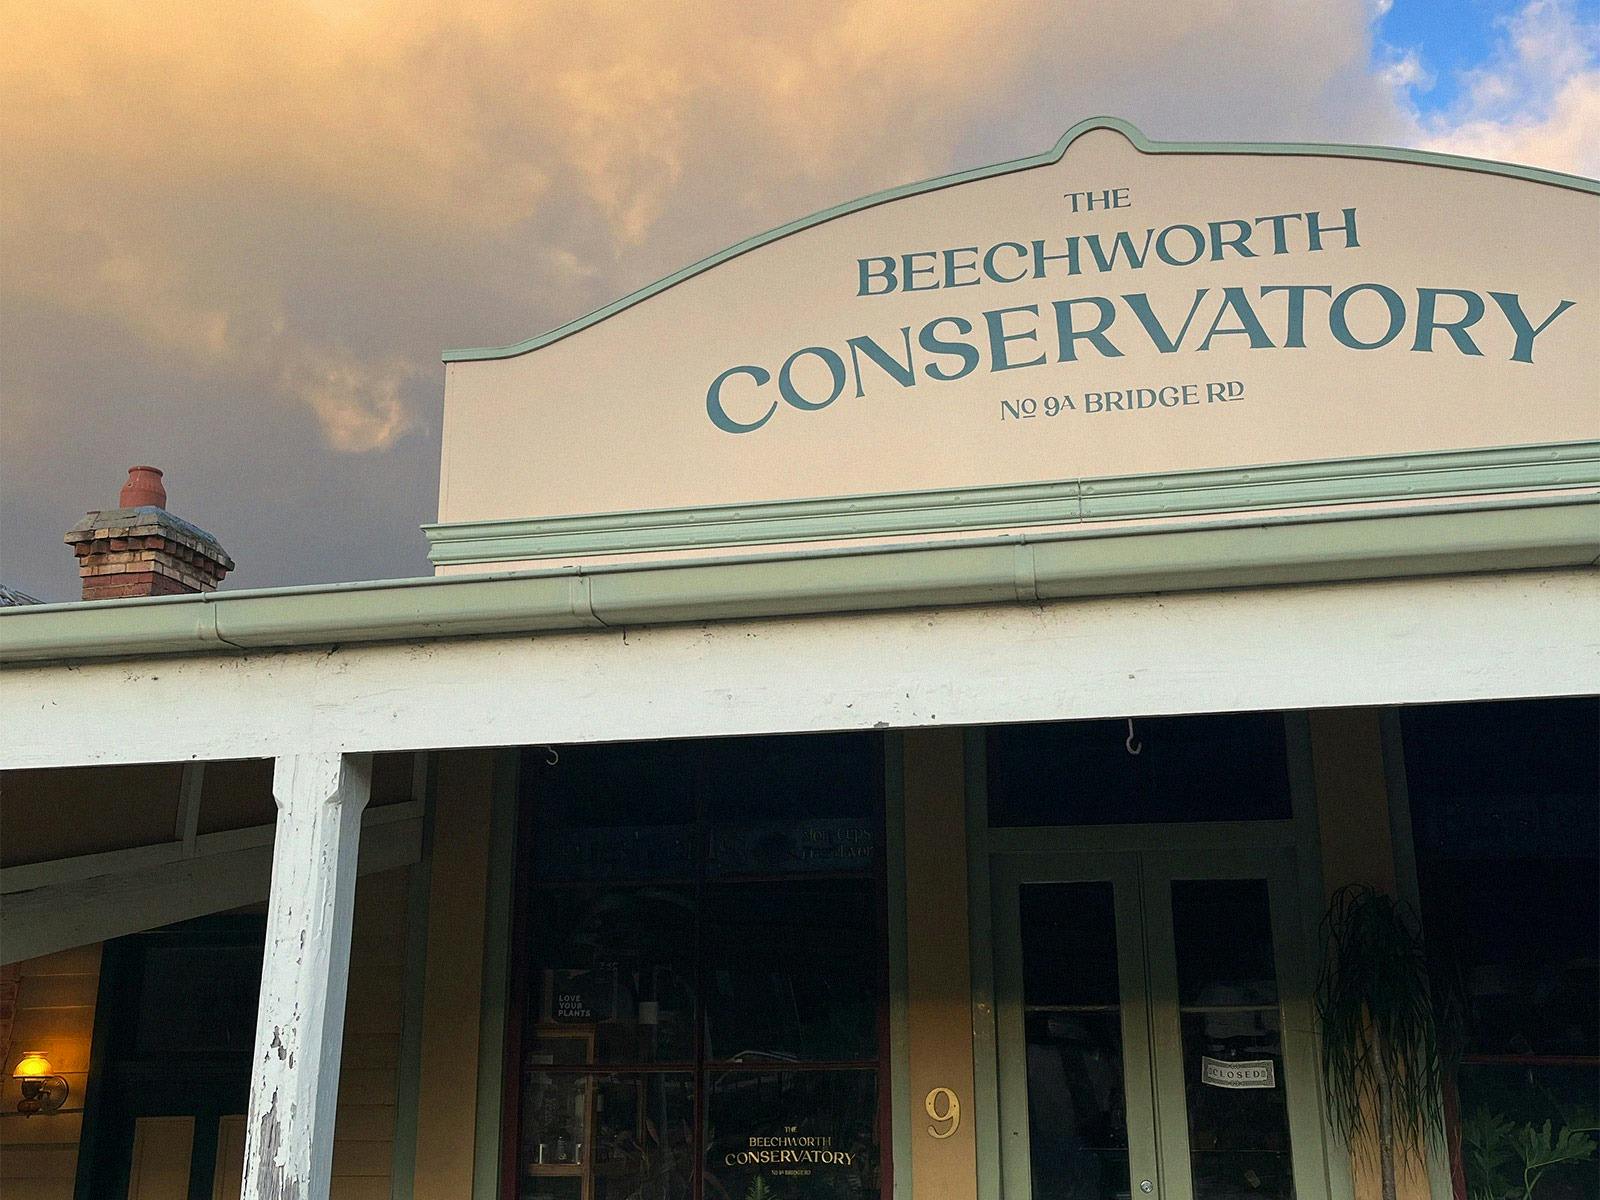 The Beechworth Conservatory heritage building front facade - 9 Bridge Road